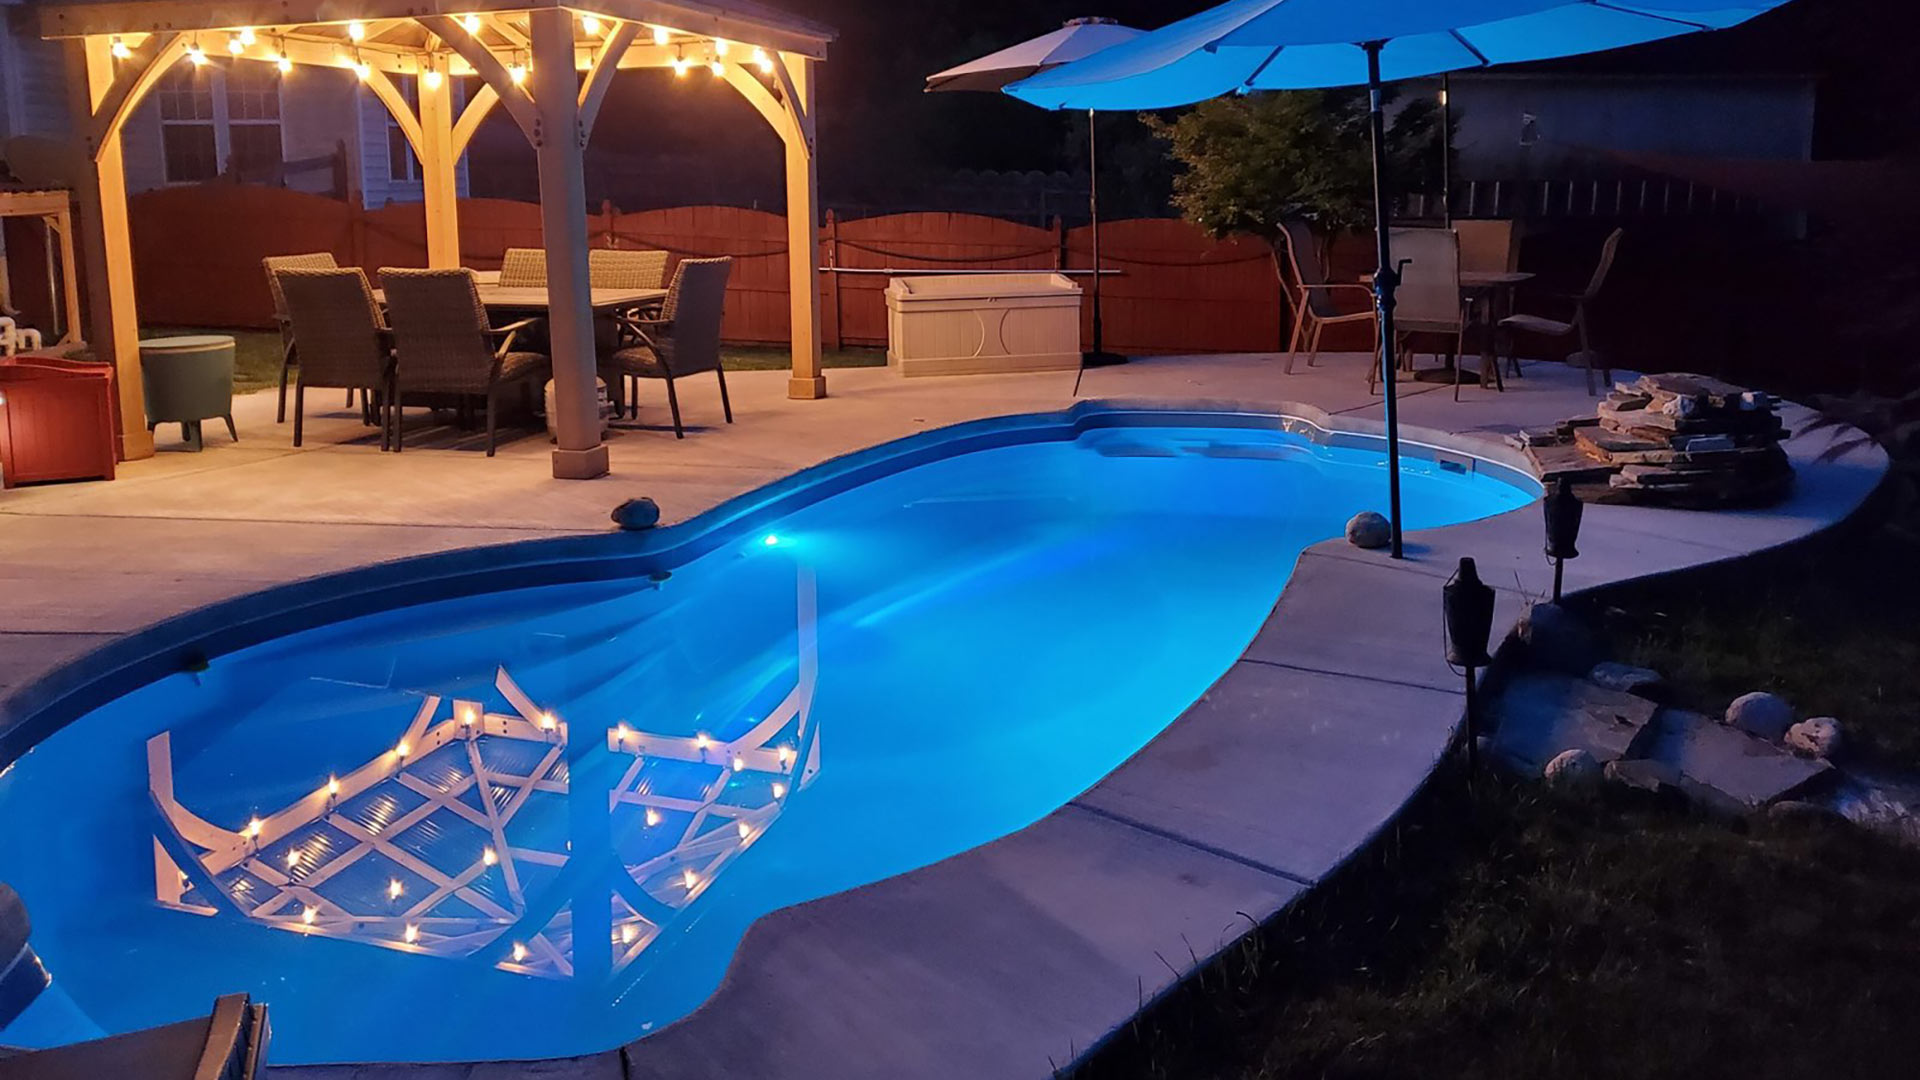 Alaglas Pools' Malibu, a medium, freeform fiberglass pool in quartz